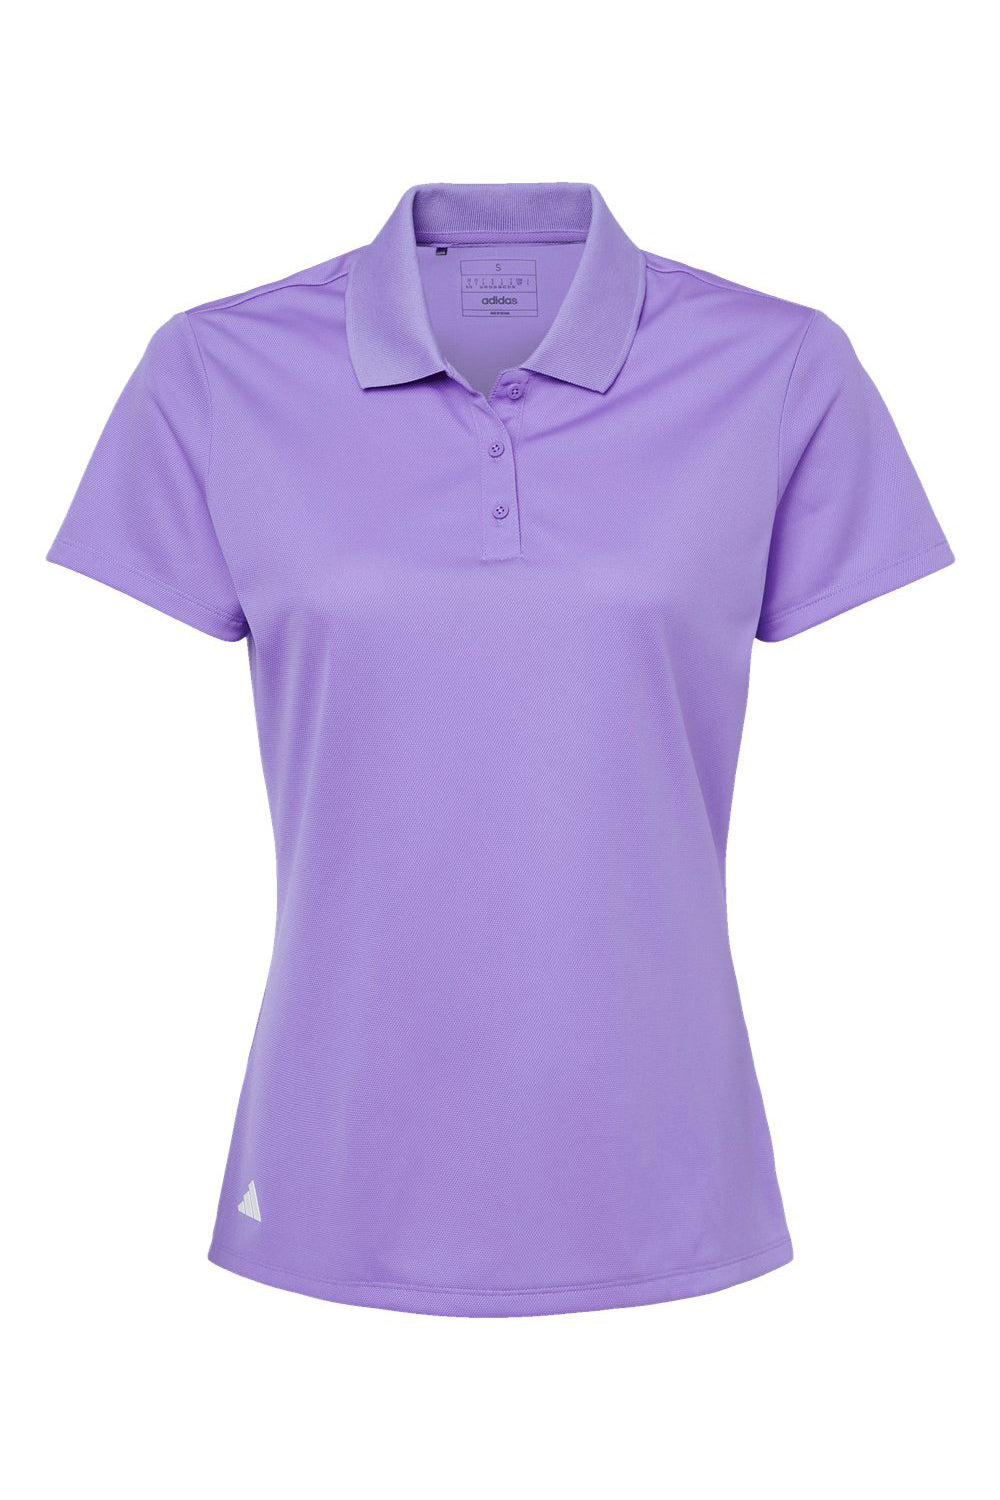 Adidas A431 Womens Basic Short Sleeve Polo Shirt Light Flash Purple Flat Front